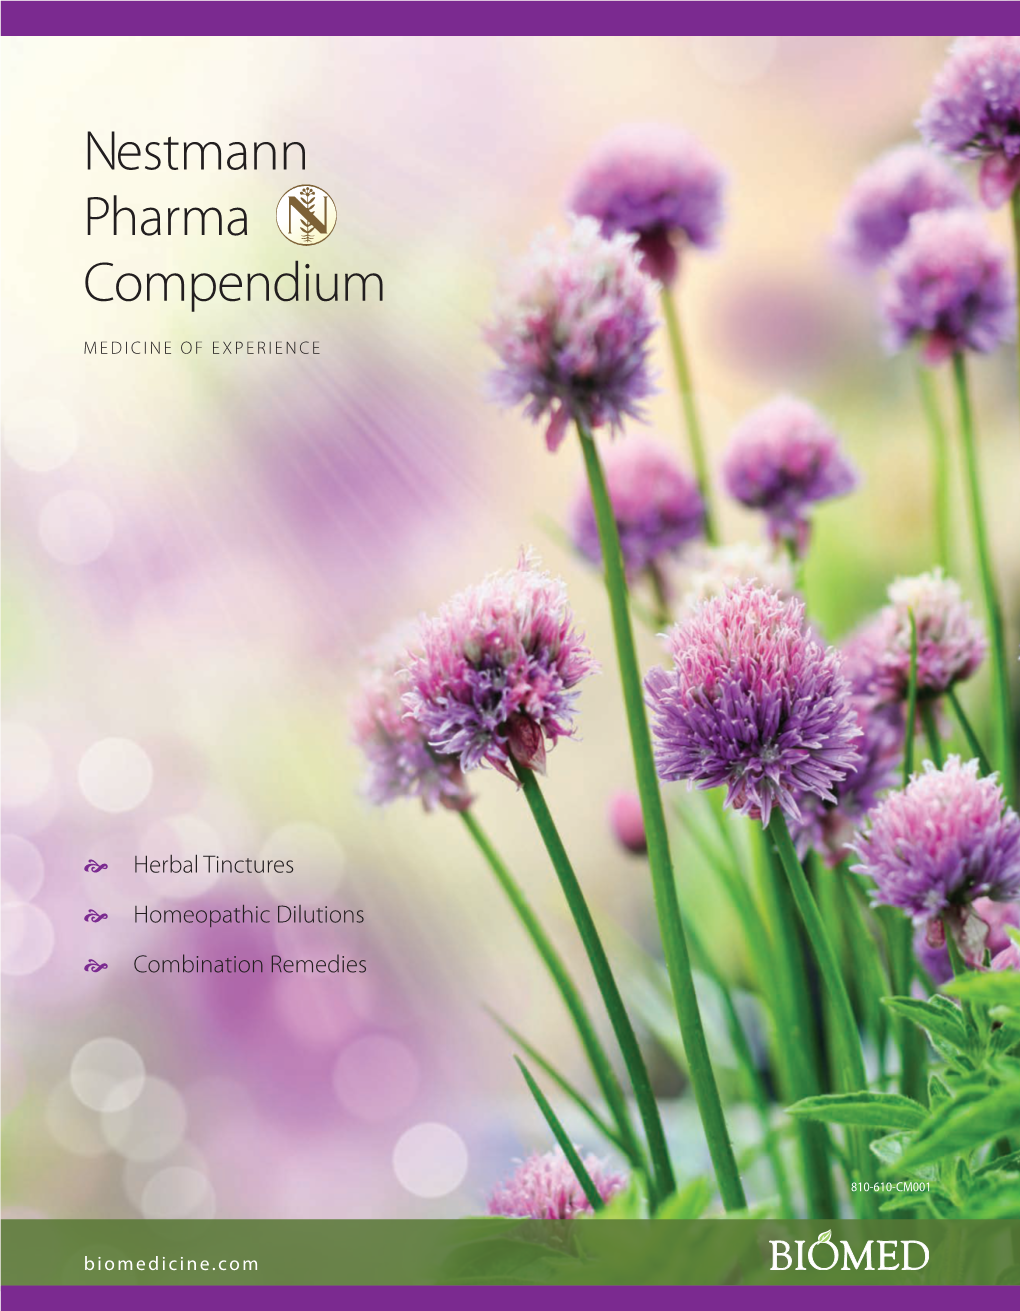 Nestmann Pharma Compendium